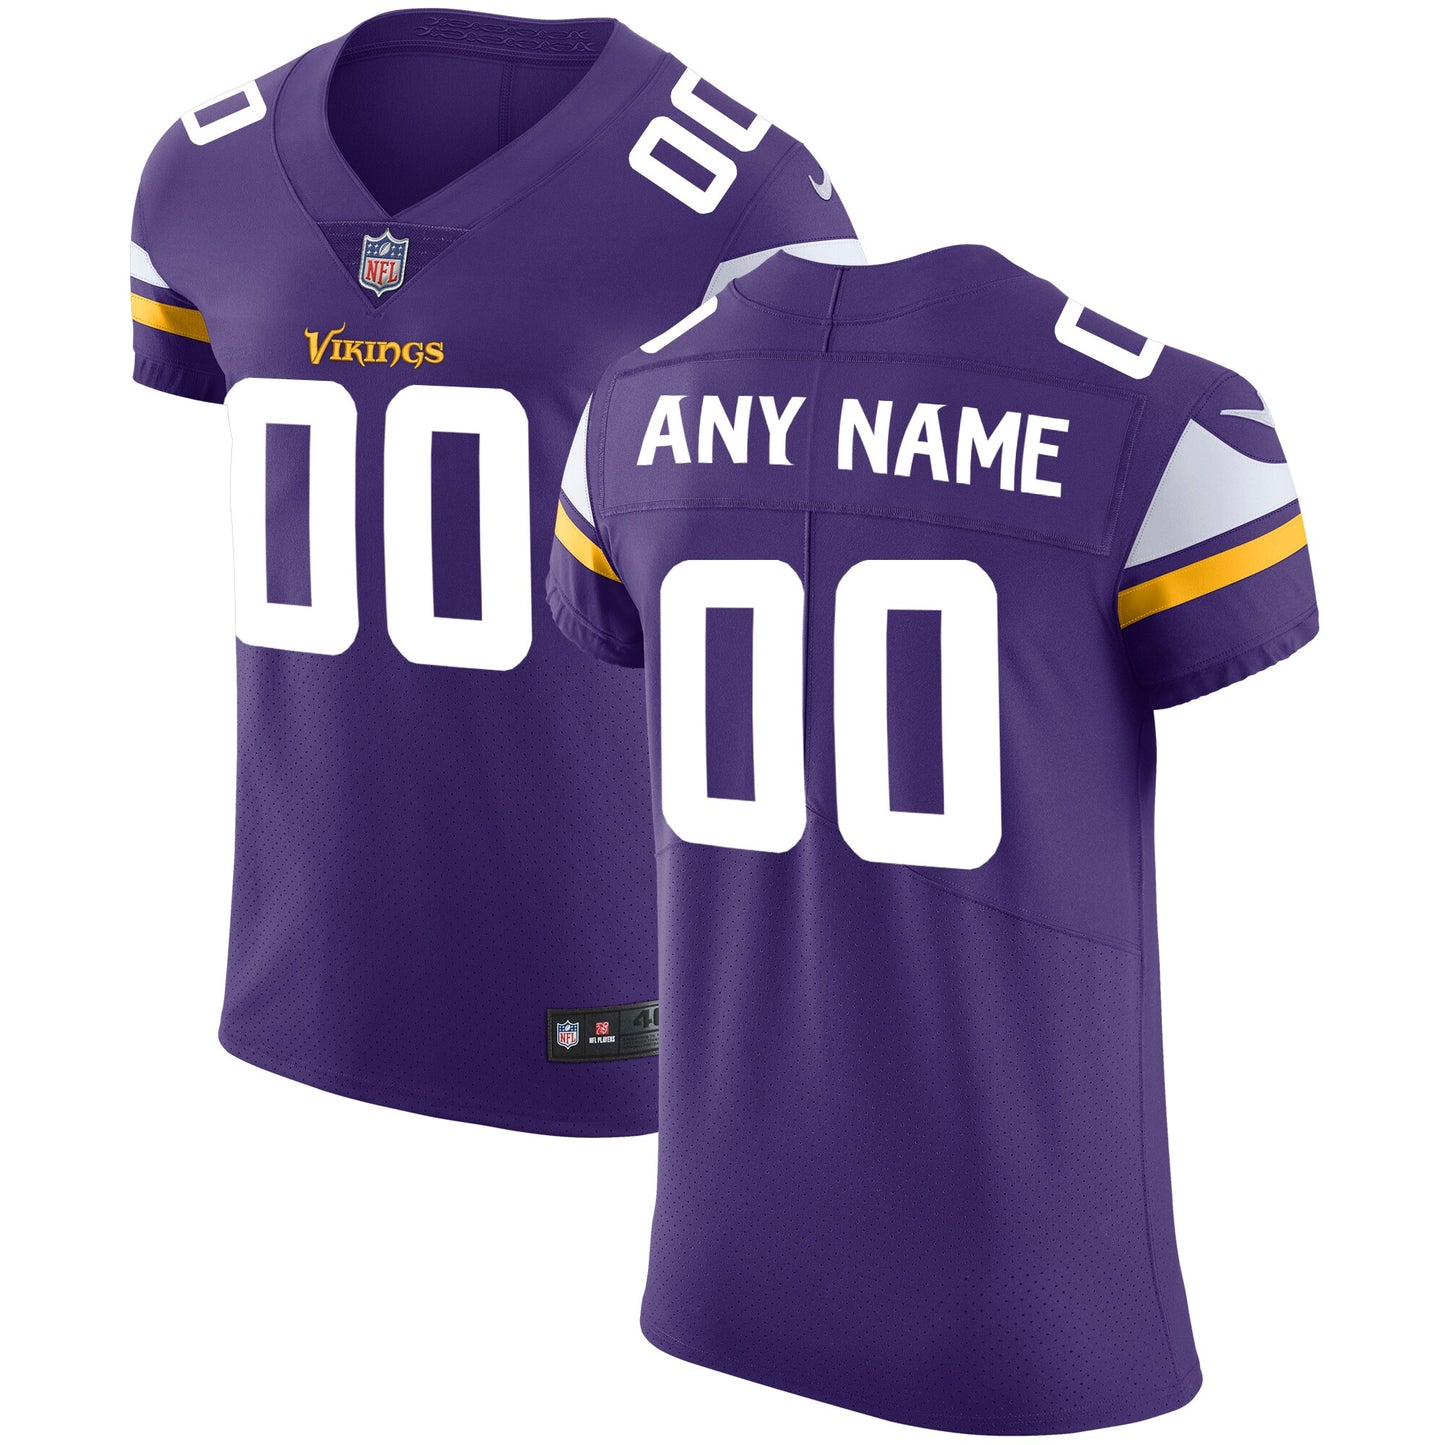 Minnesota Vikings Nike Vapor Untouchable Custom Elite Jersey - Purple